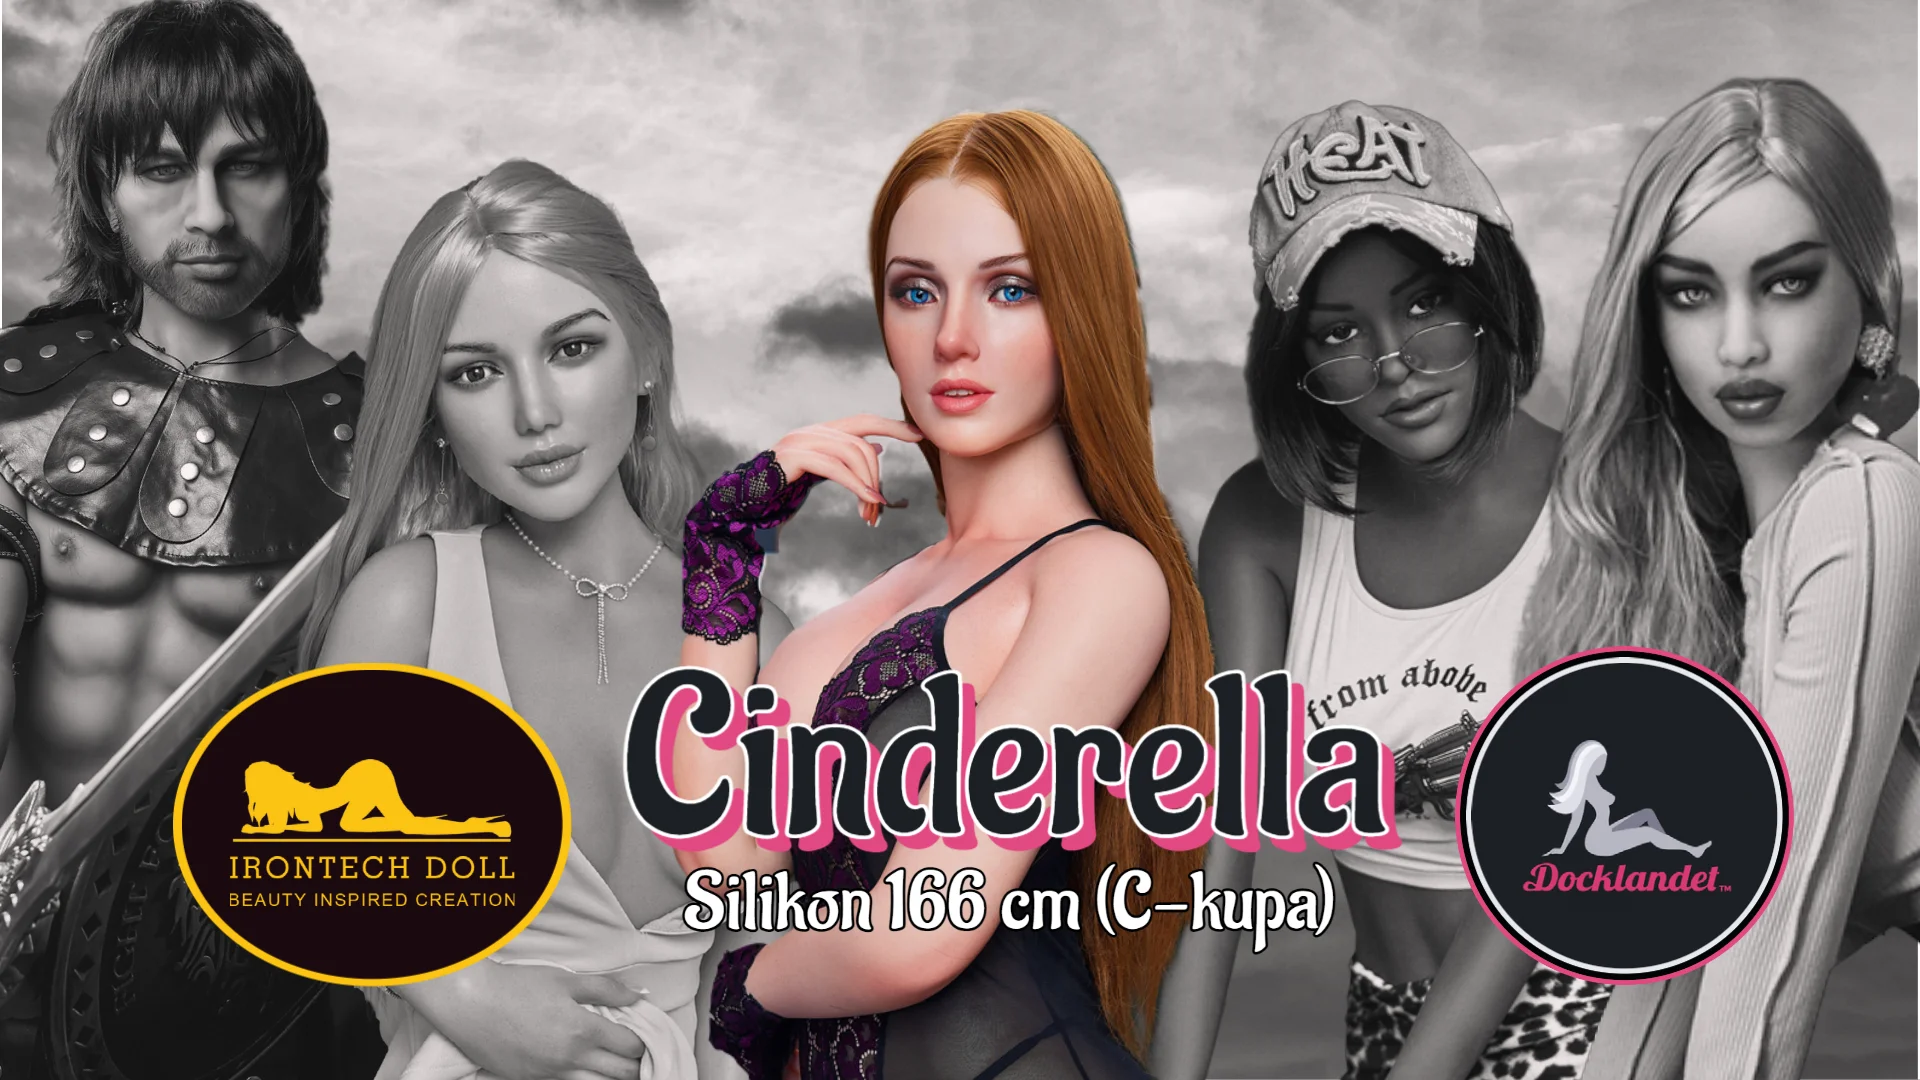 Cinderella Irontech Doll (166 cm C-kupa Silikon) on Vimeo